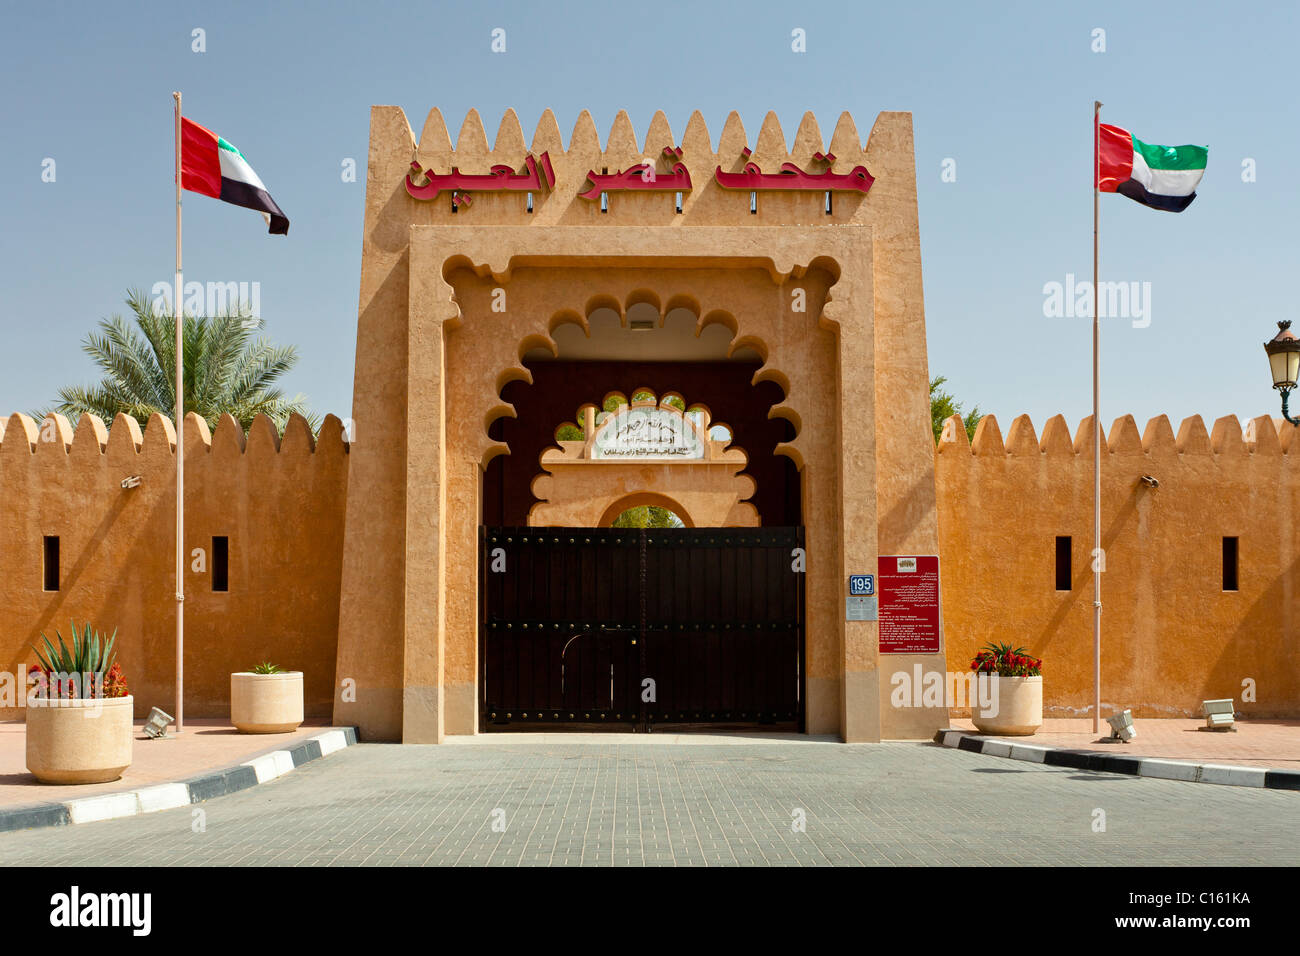 L'Al Ain Palace Museum di Al Ain, Abu Dhabi Emirato, UAE. Foto Stock